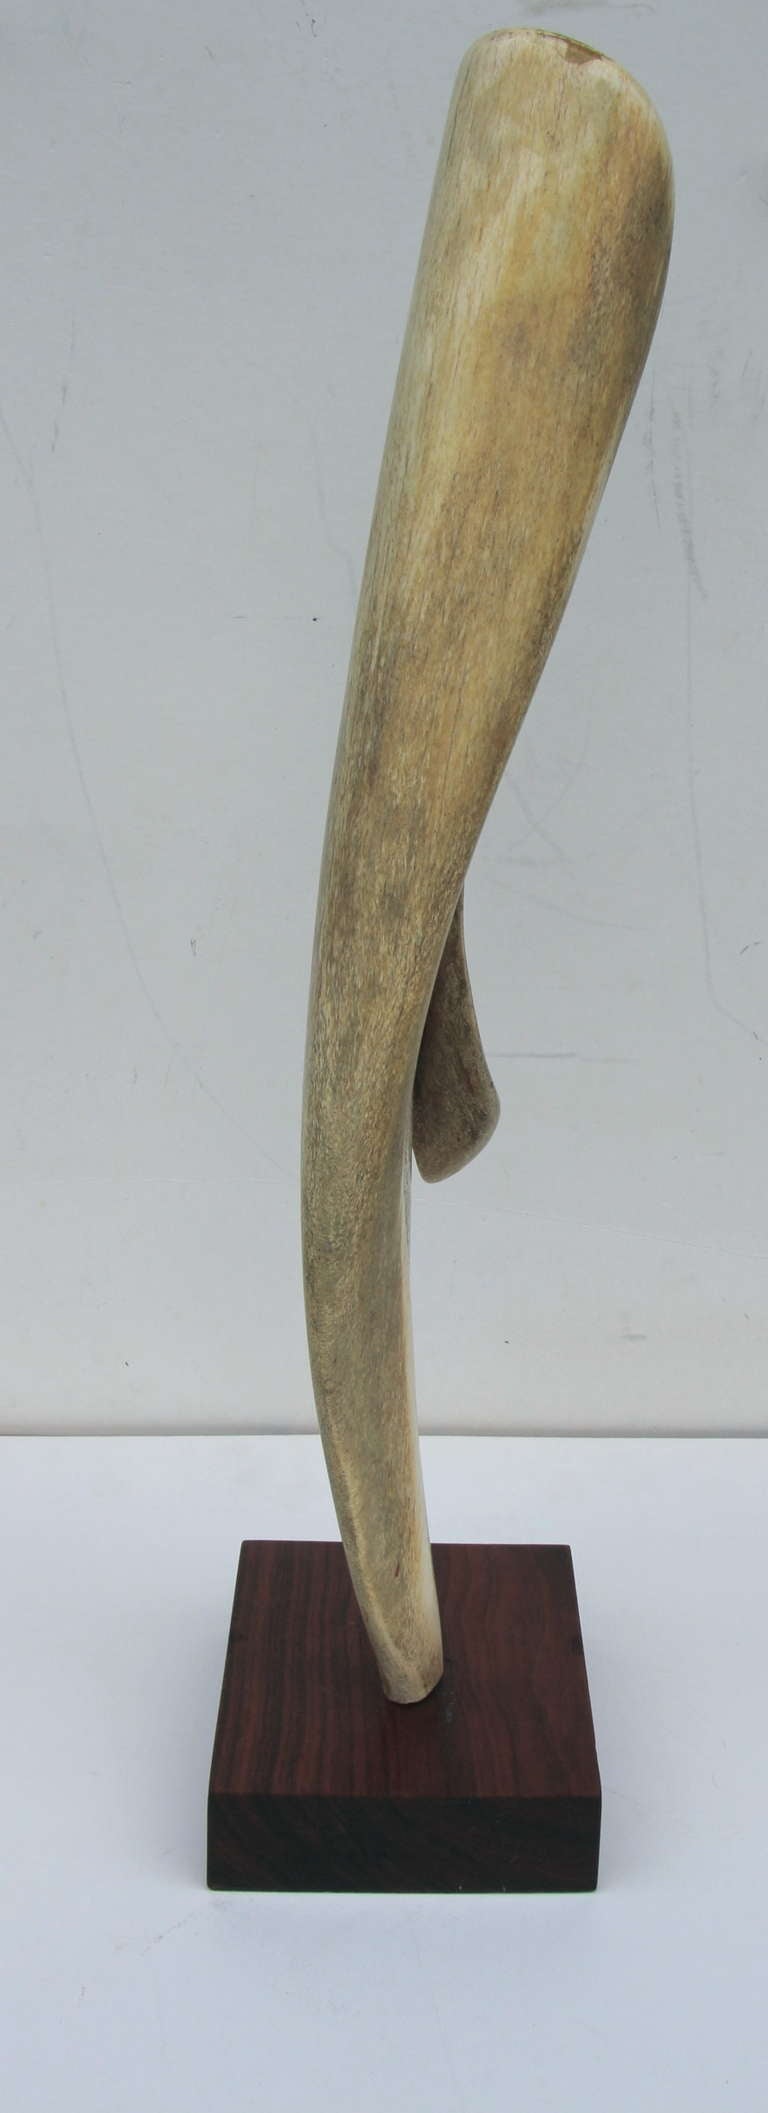 Wood Alex Taller Abstract Bone Sculpture For Sale